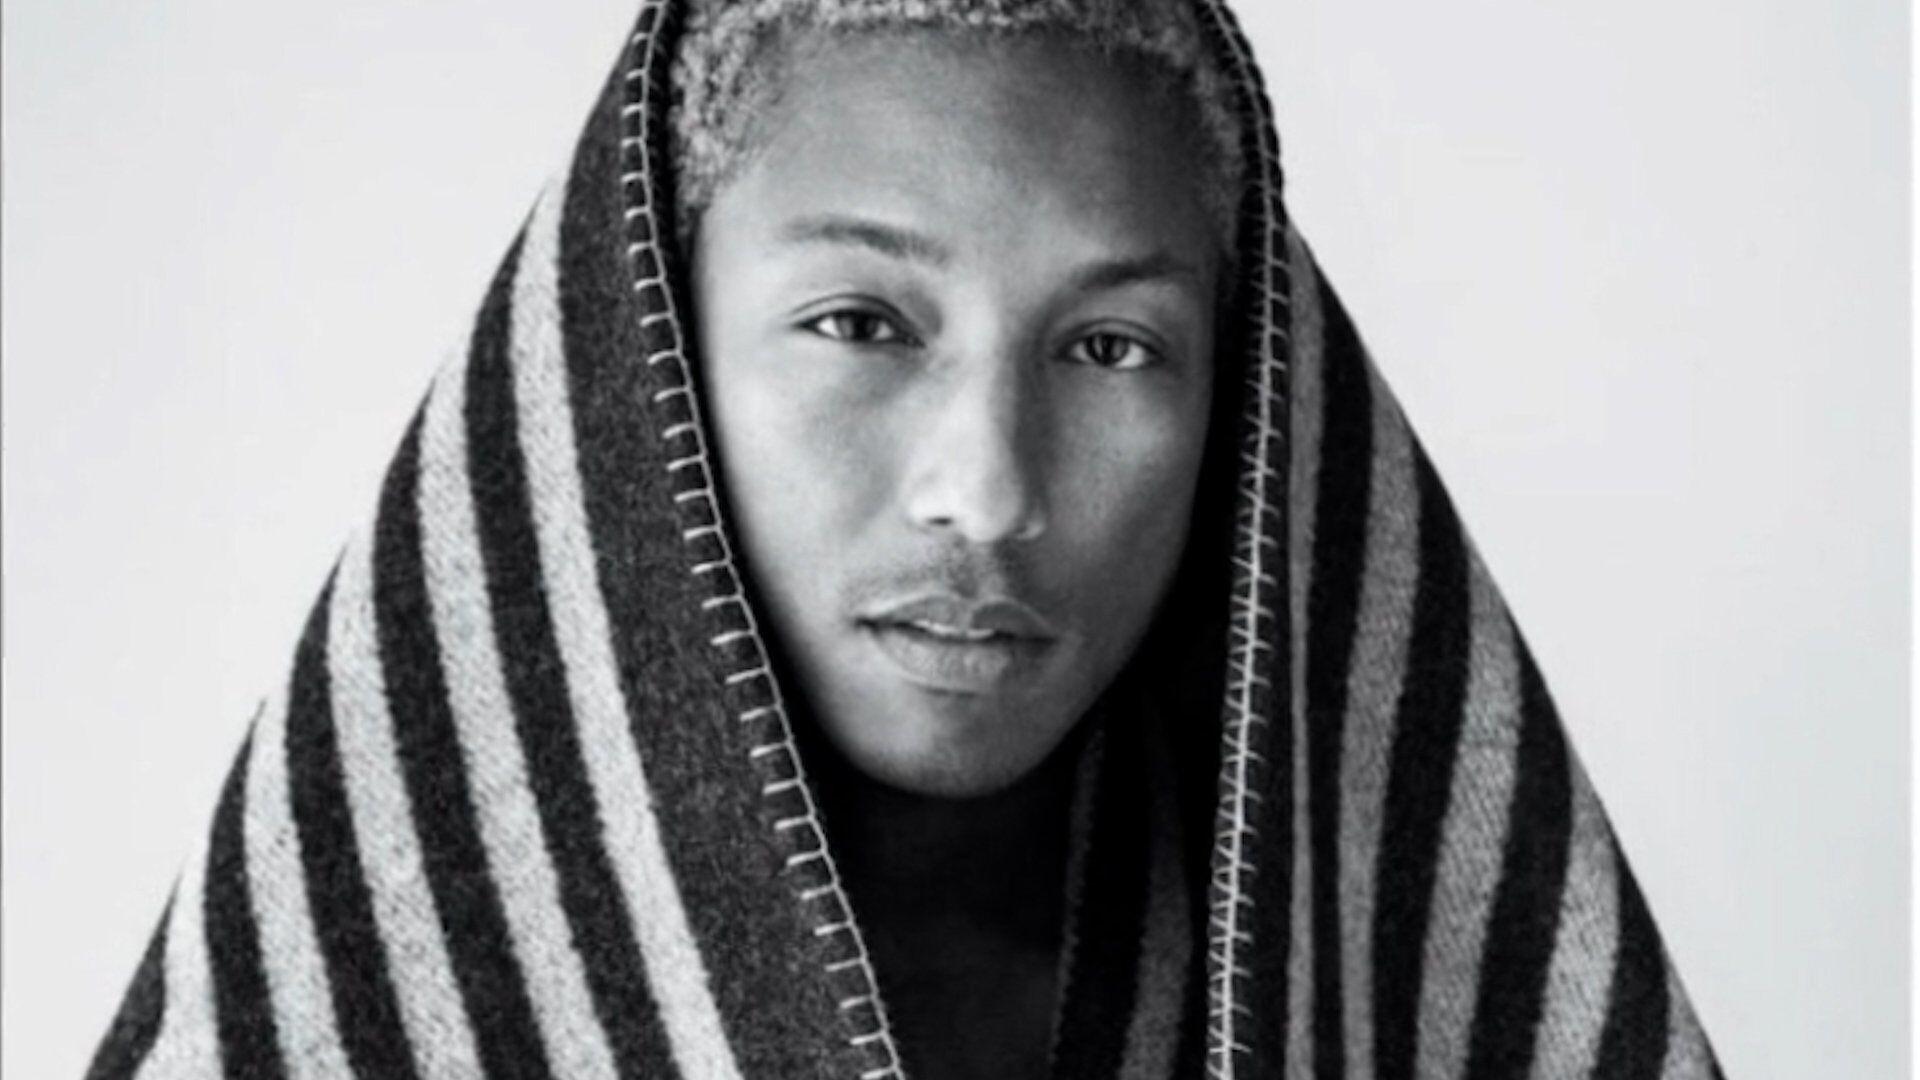 Pharrell Williams named Louis Vuitton men's creative director